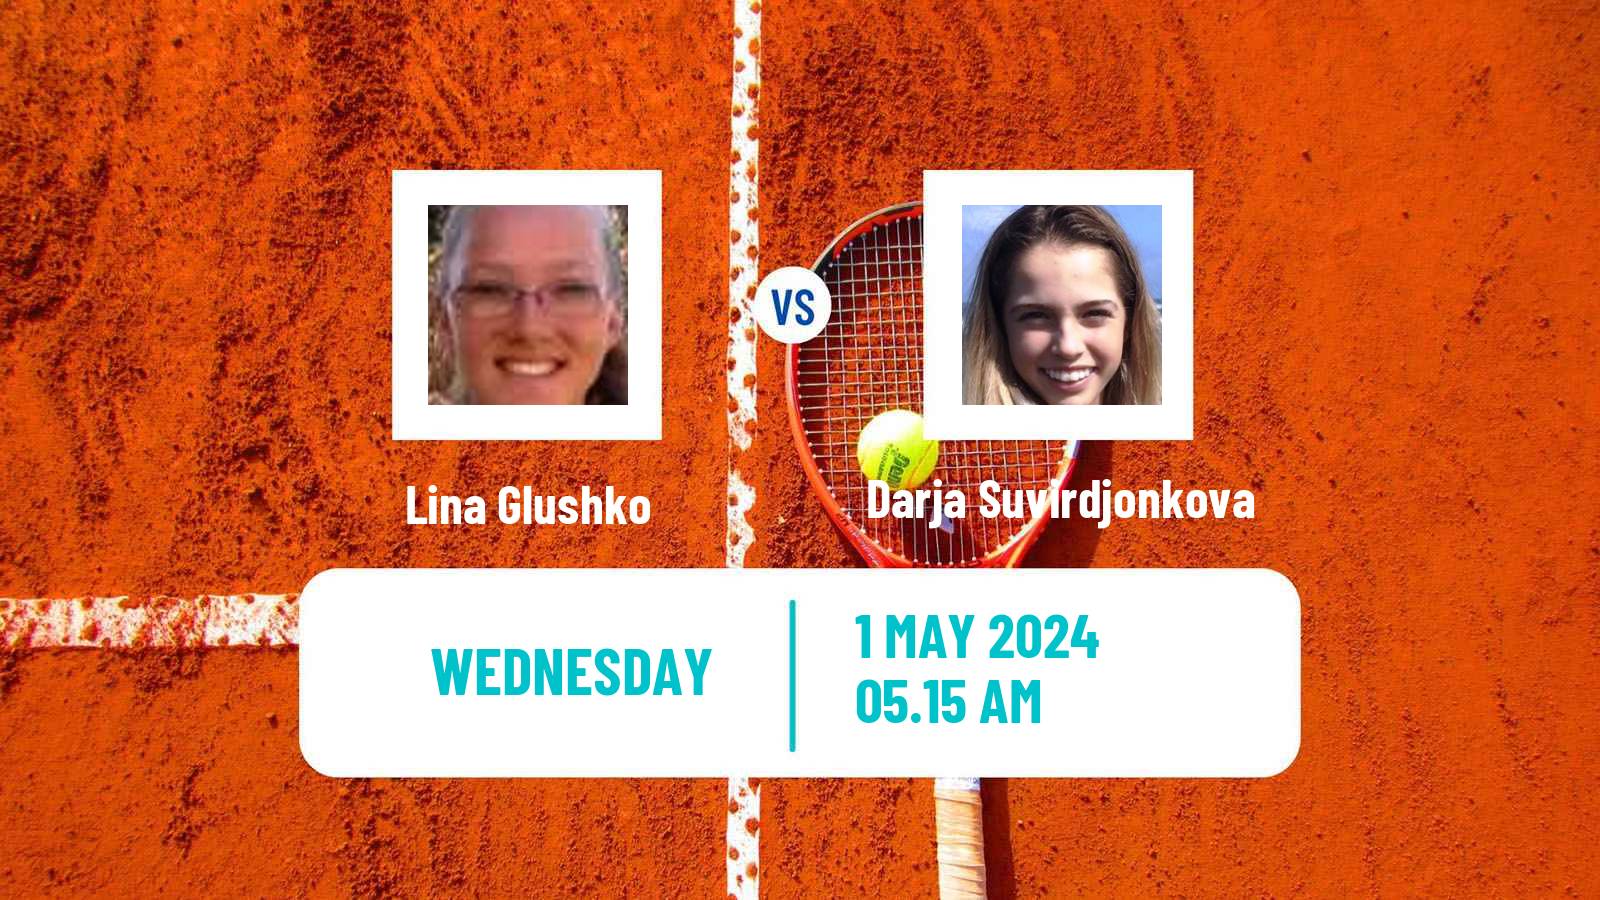 Tennis ITF W50 Lopota 2 Women Lina Glushko - Darja Suvirdjonkova